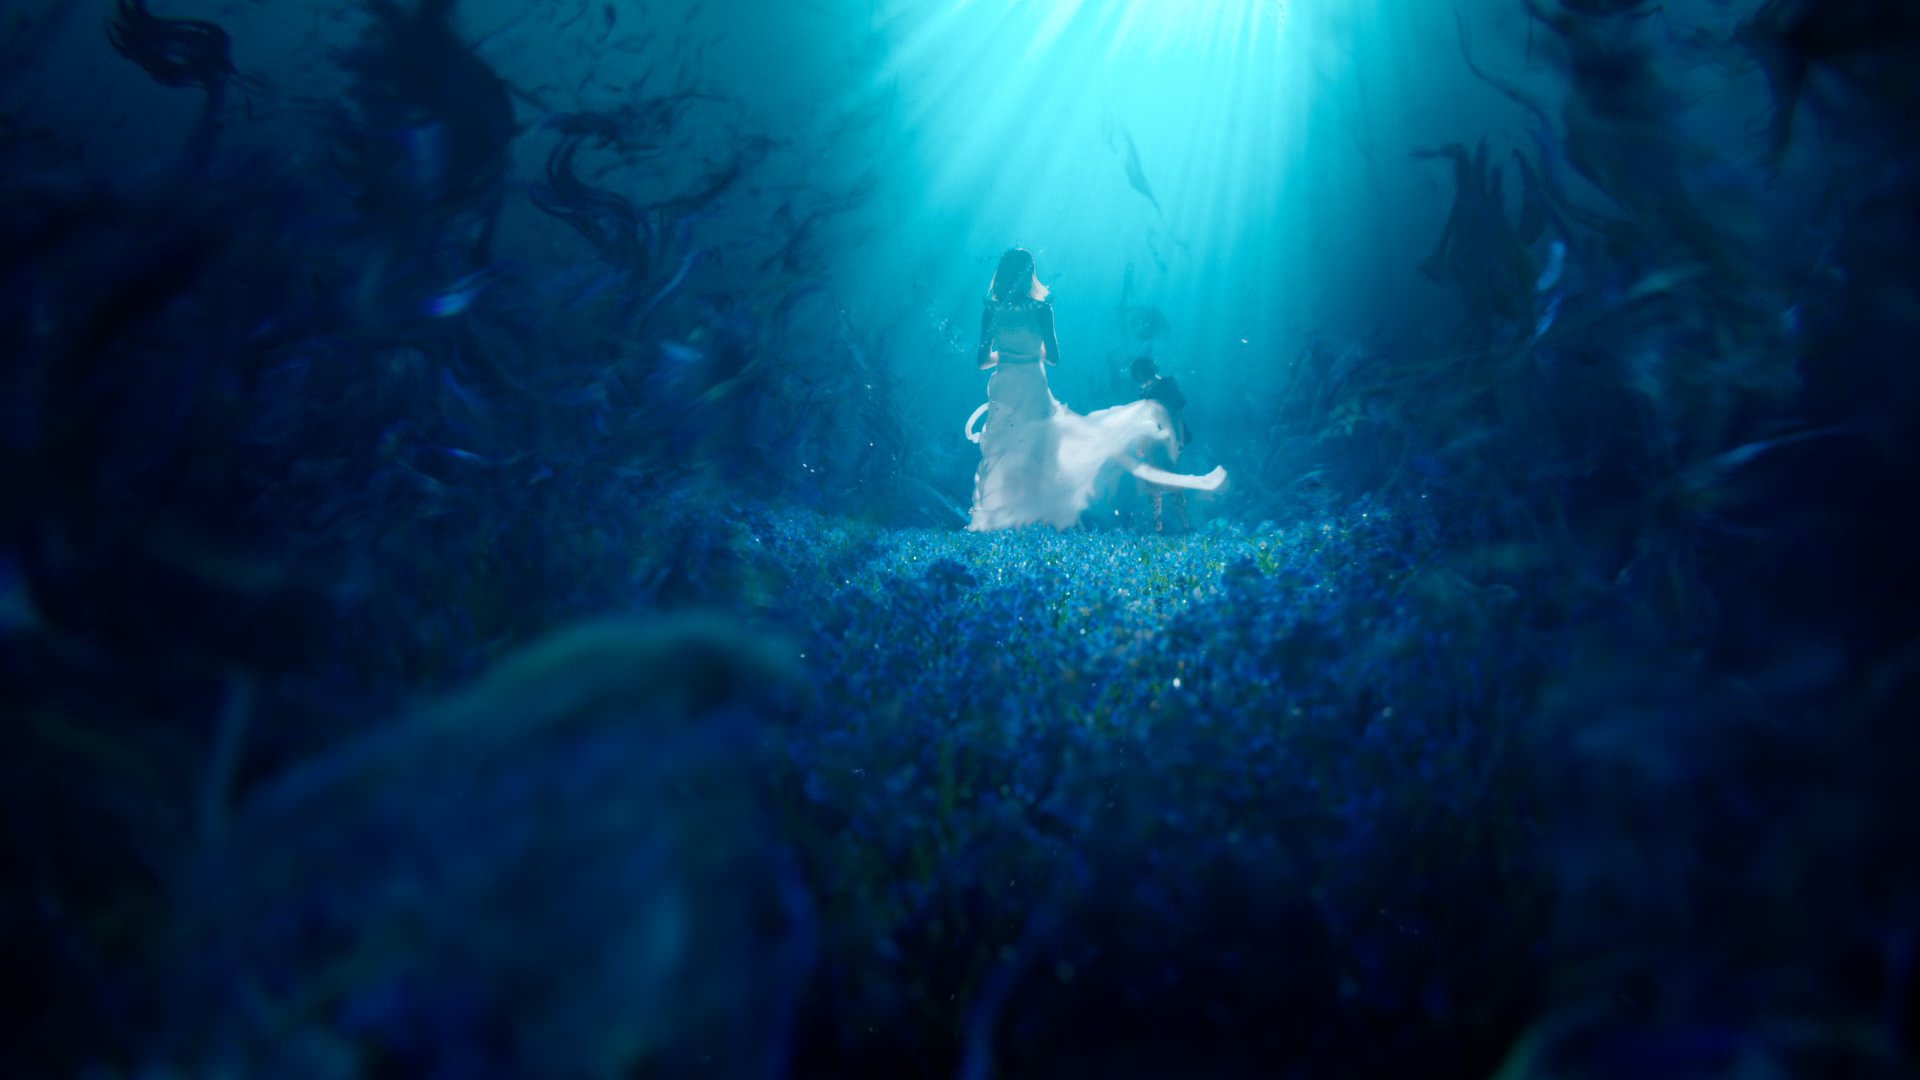 Underwater Final Fantasy 15 Wallpapers